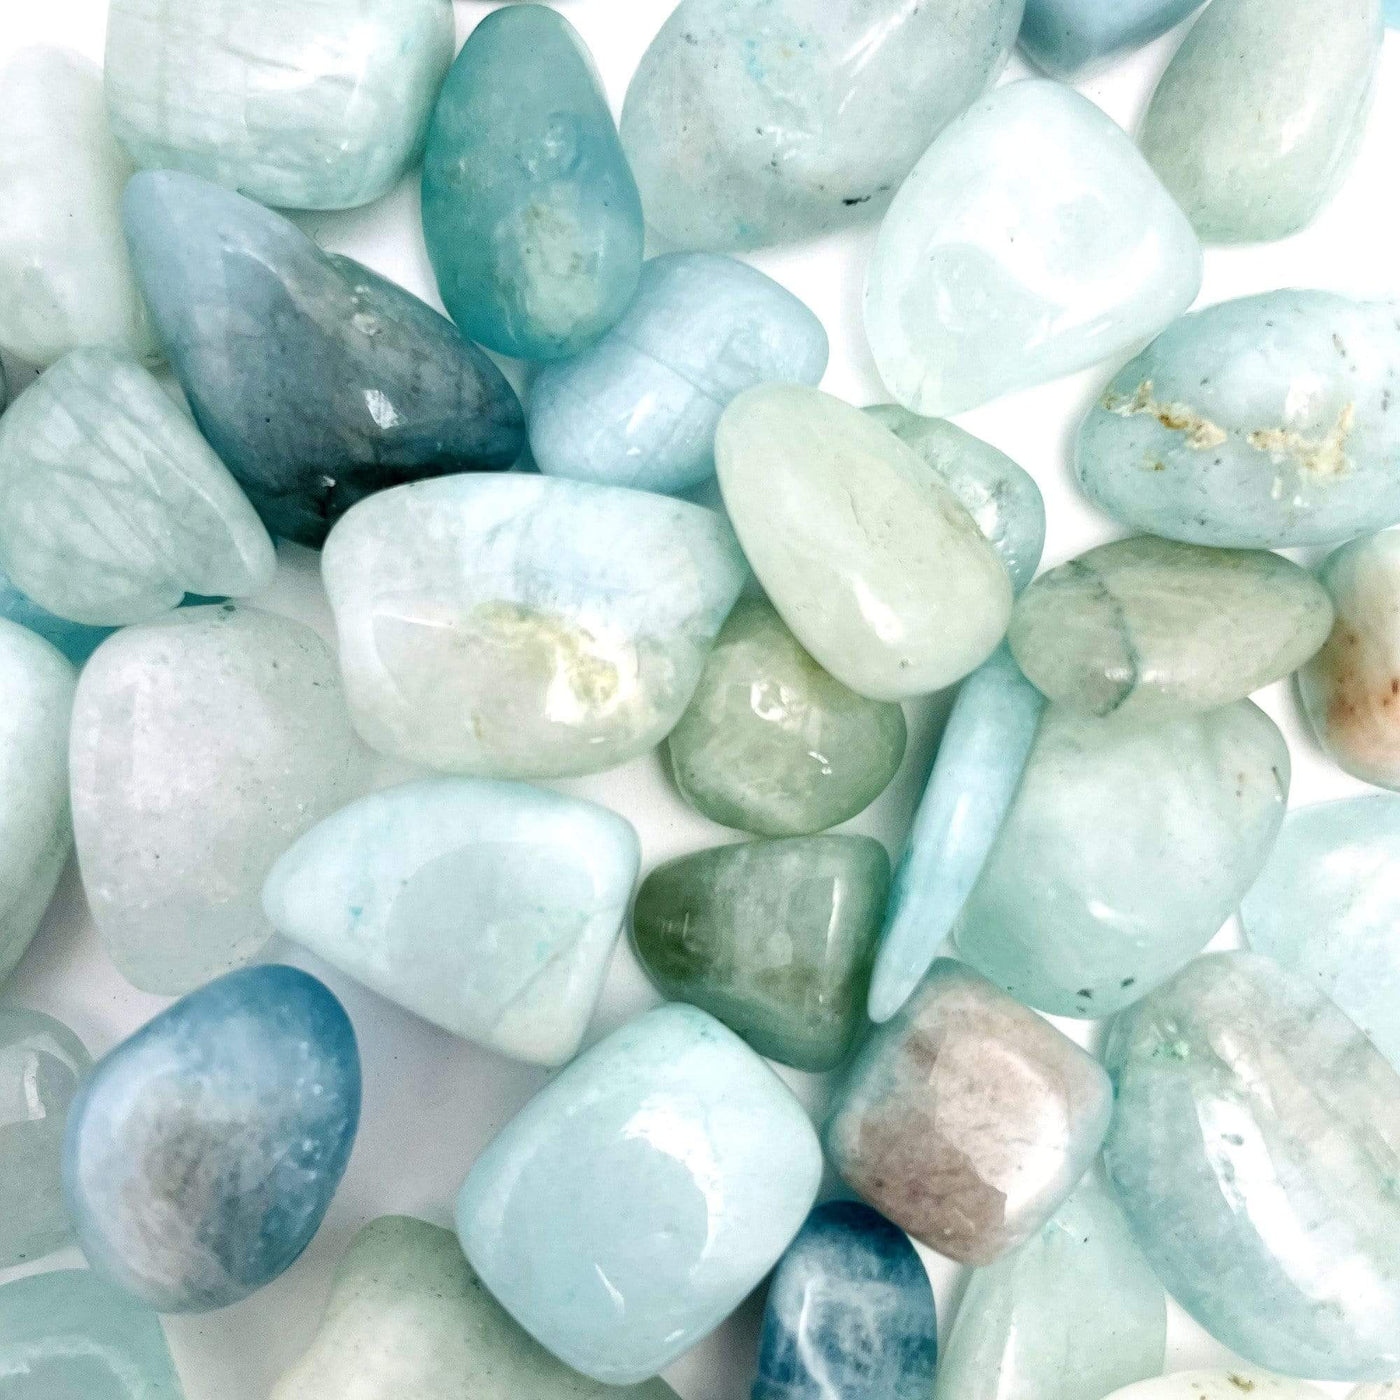 Aquamarine Tumbled Stones Nuggets scattered across white background